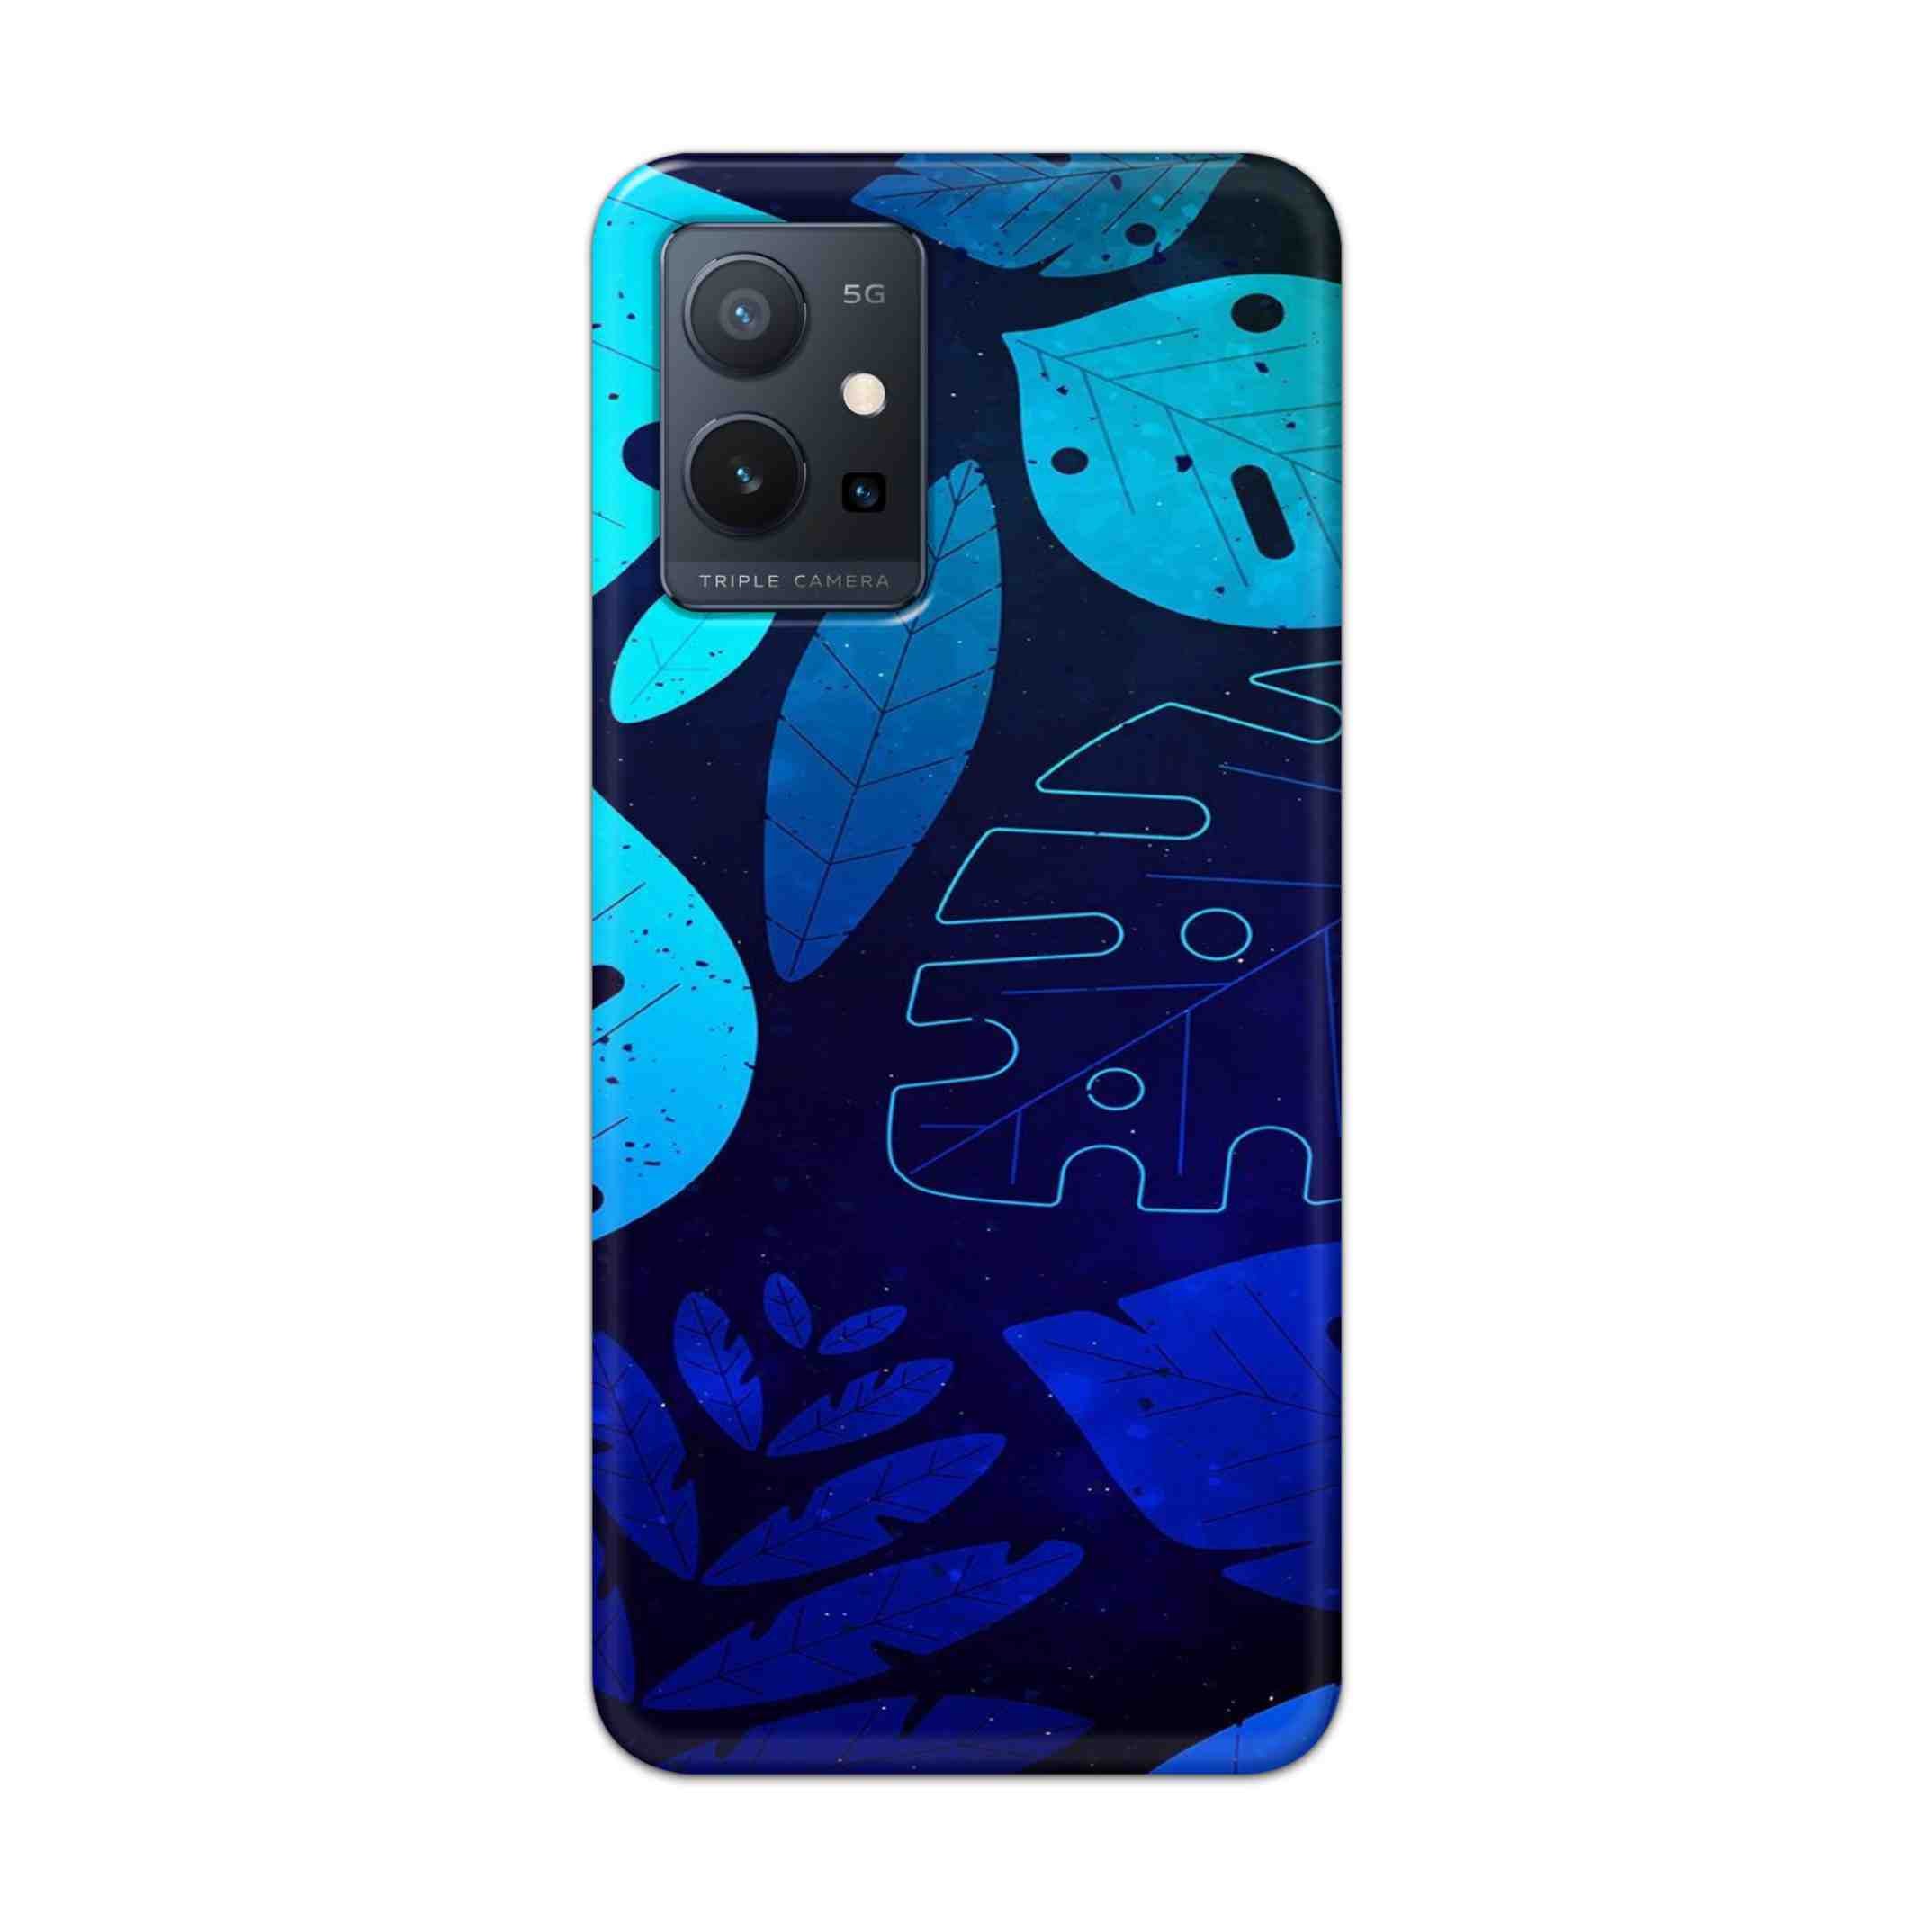 Buy Neon Leaf Hard Back Mobile Phone Case Cover For Vivo T1 5G Online